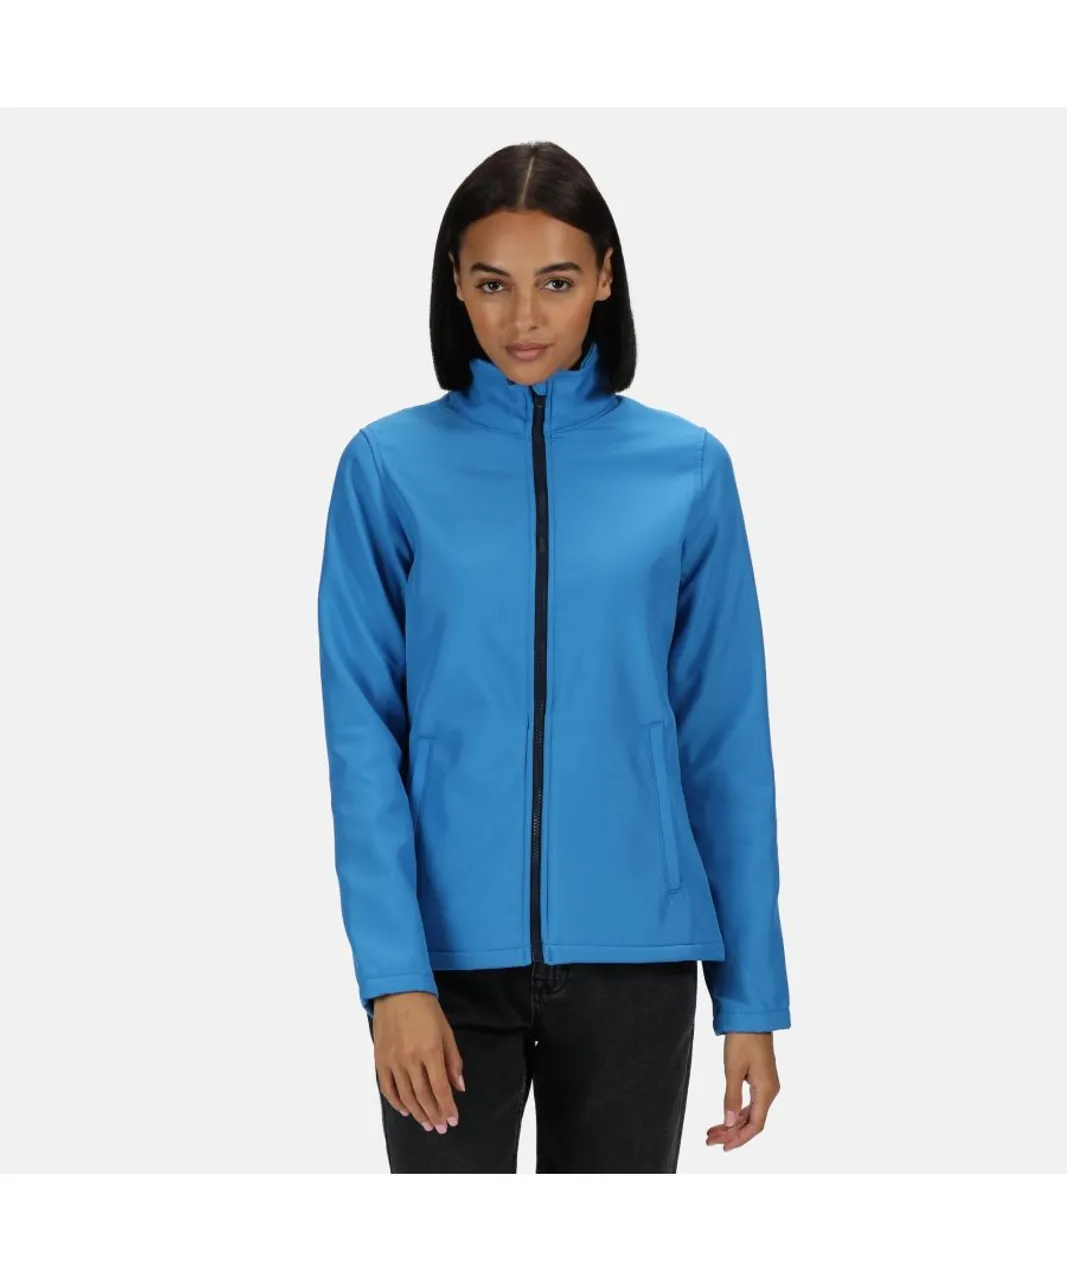 Regatta Standout Womens/Ladies Ablaze Printable Soft Shell Jacket - Blue